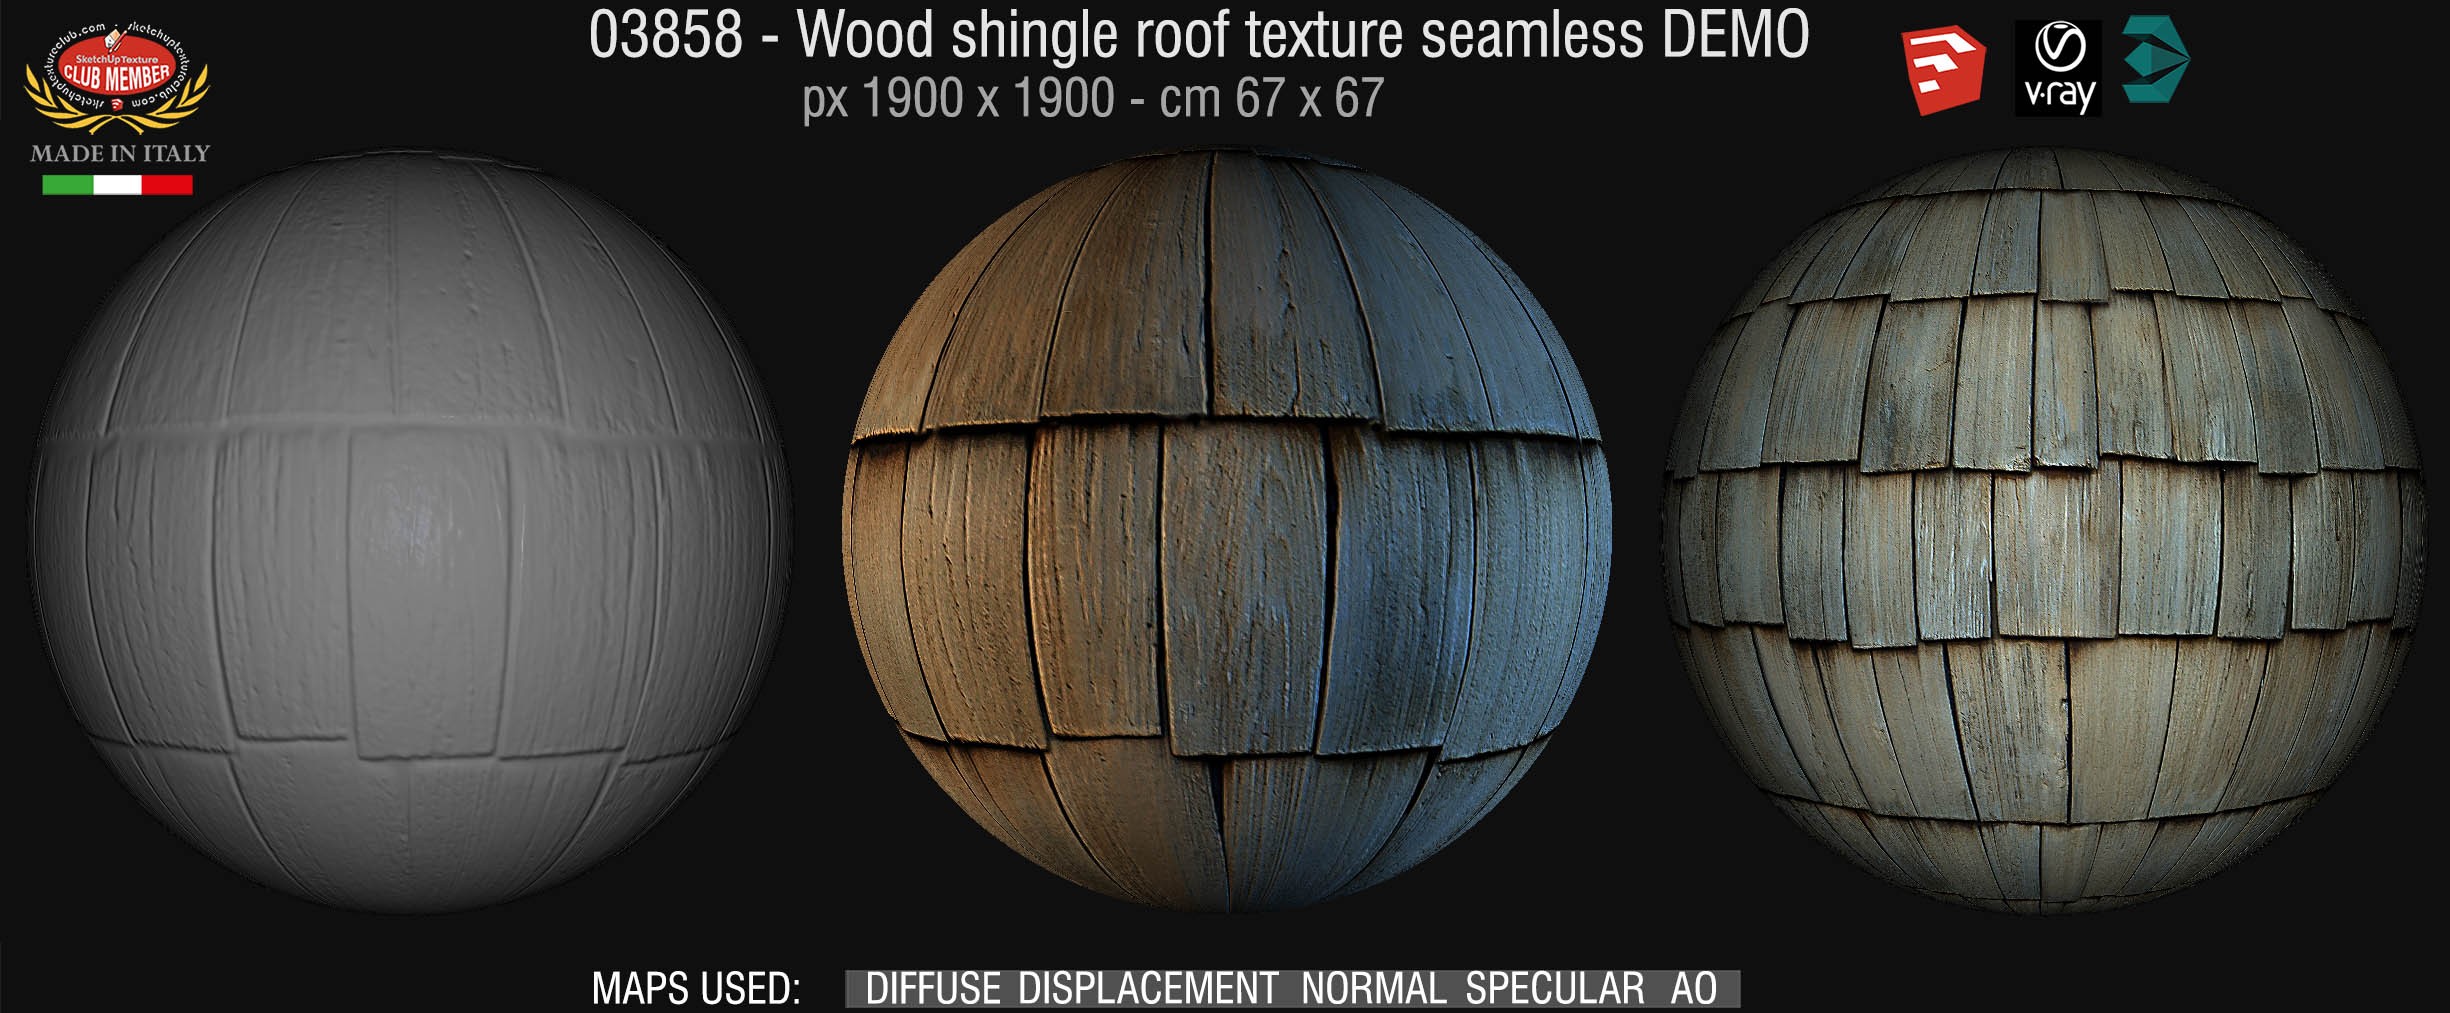 03858 Wood shingle roof texture seamless + maps DEMO